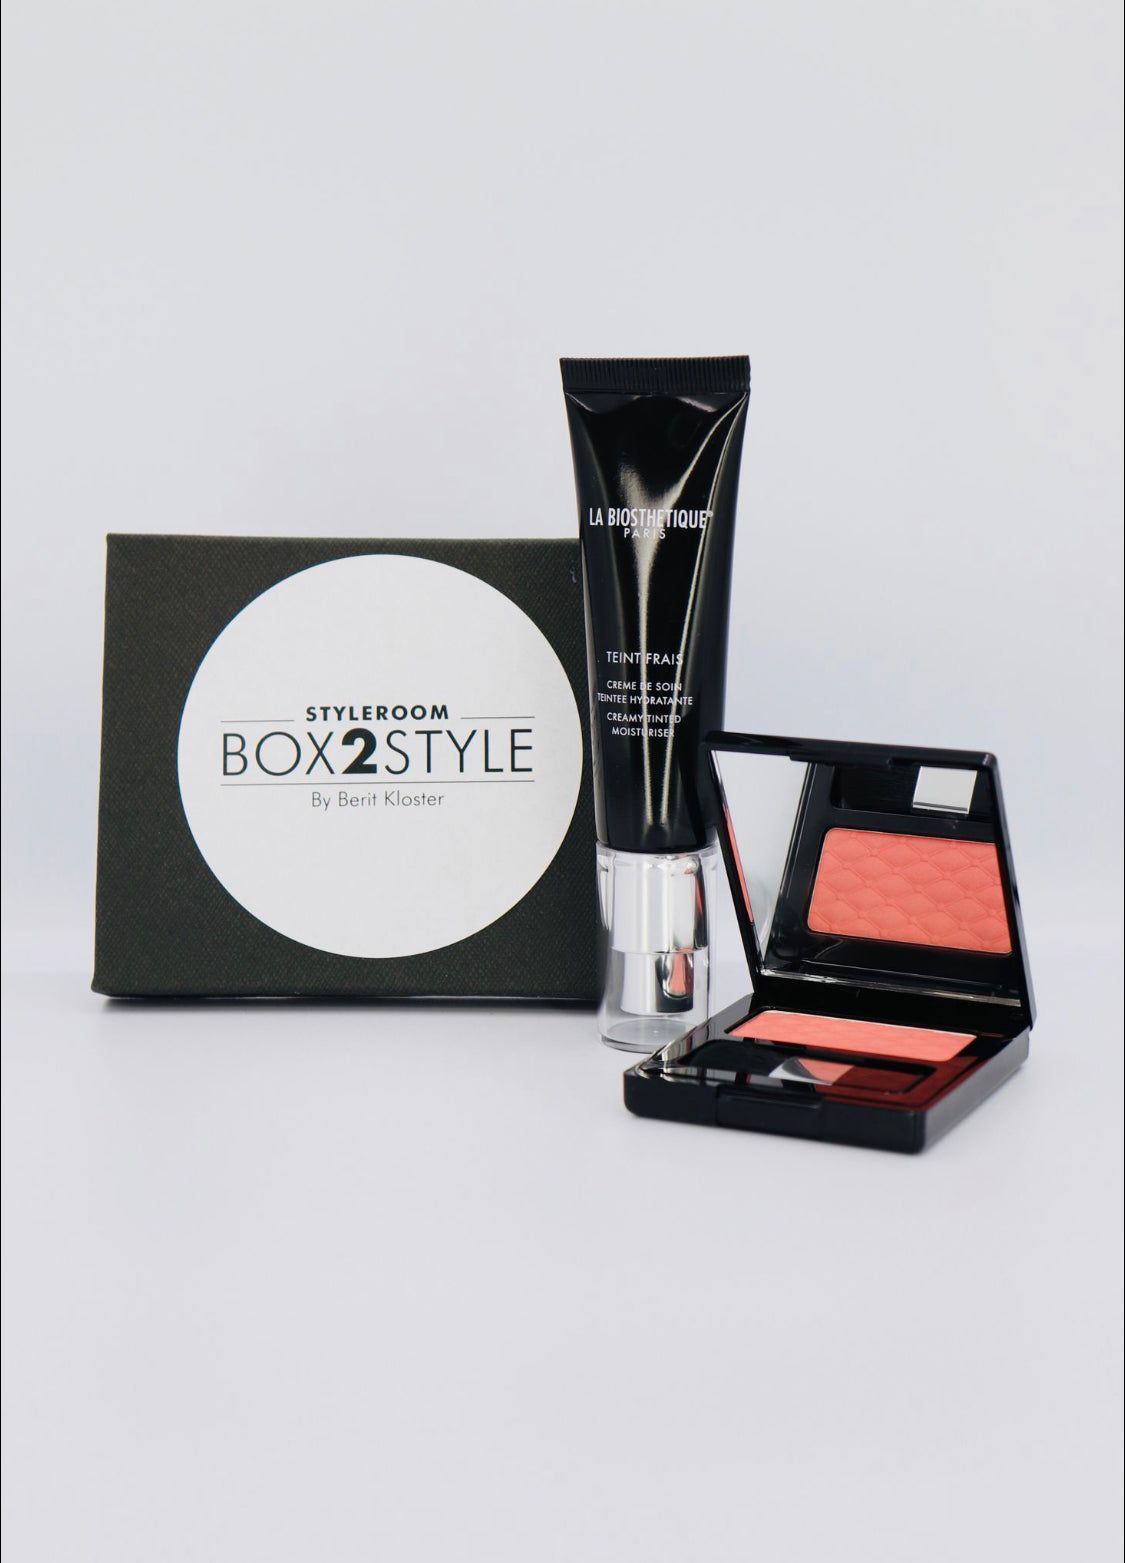 Box2style La Biosthetique makeup